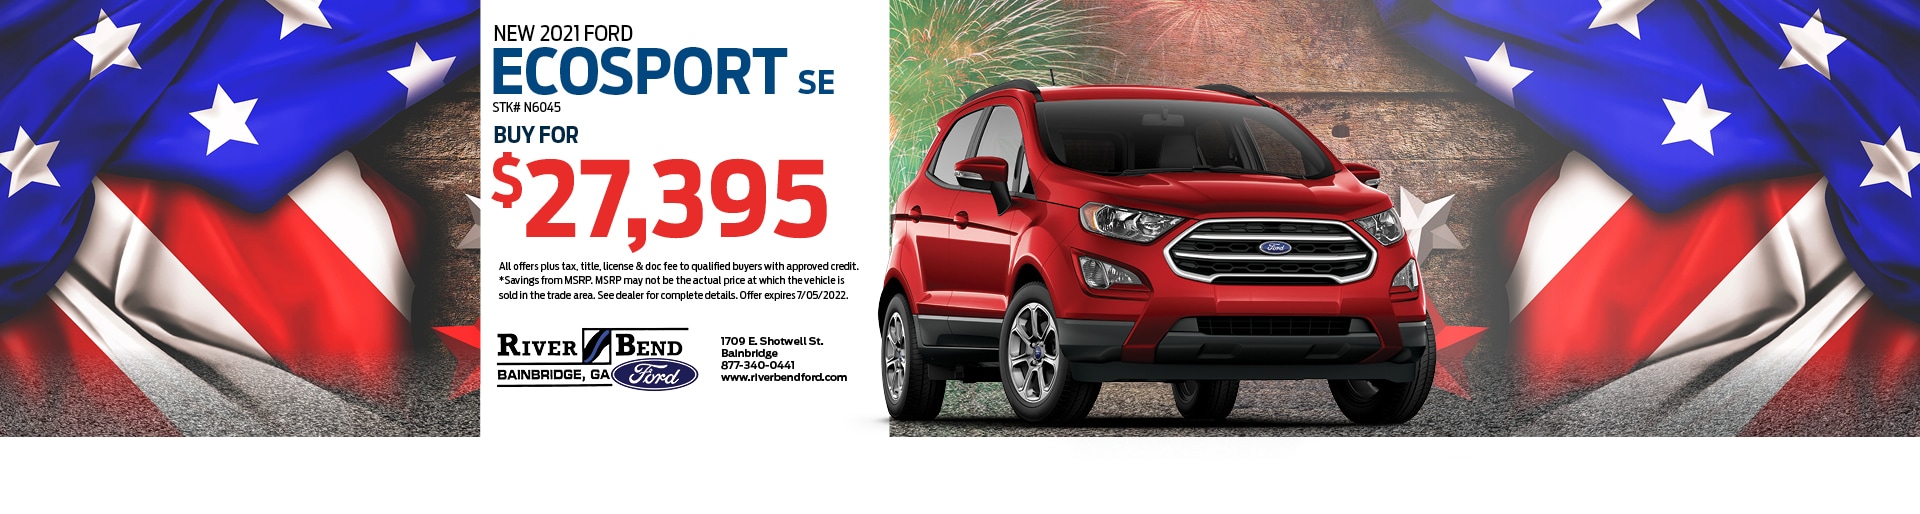 2021 Ford EcoSport SE for $27,395